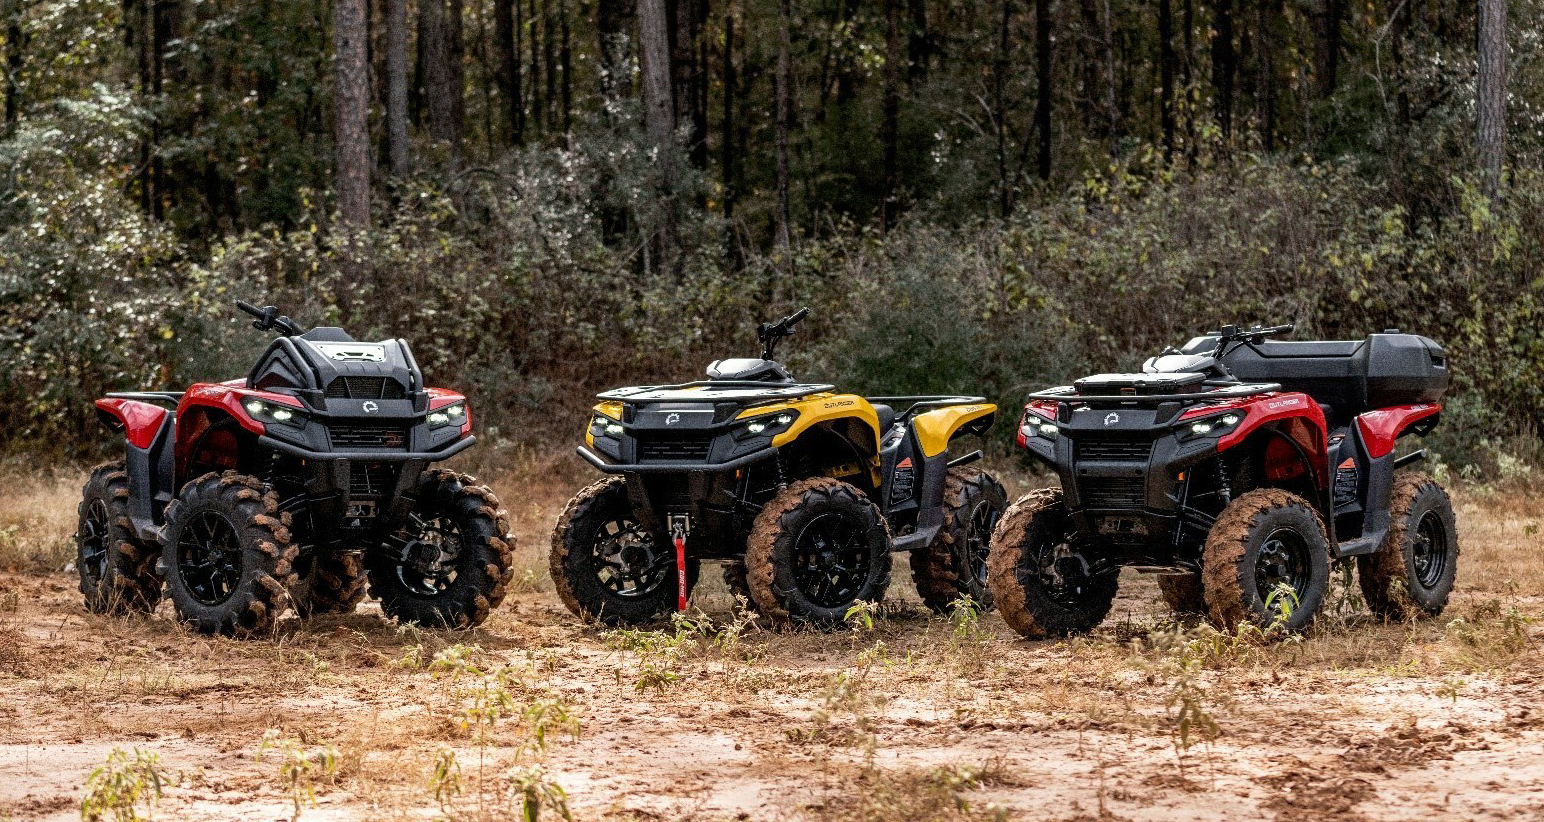 Can-Am unveils new mid-cc ATV models